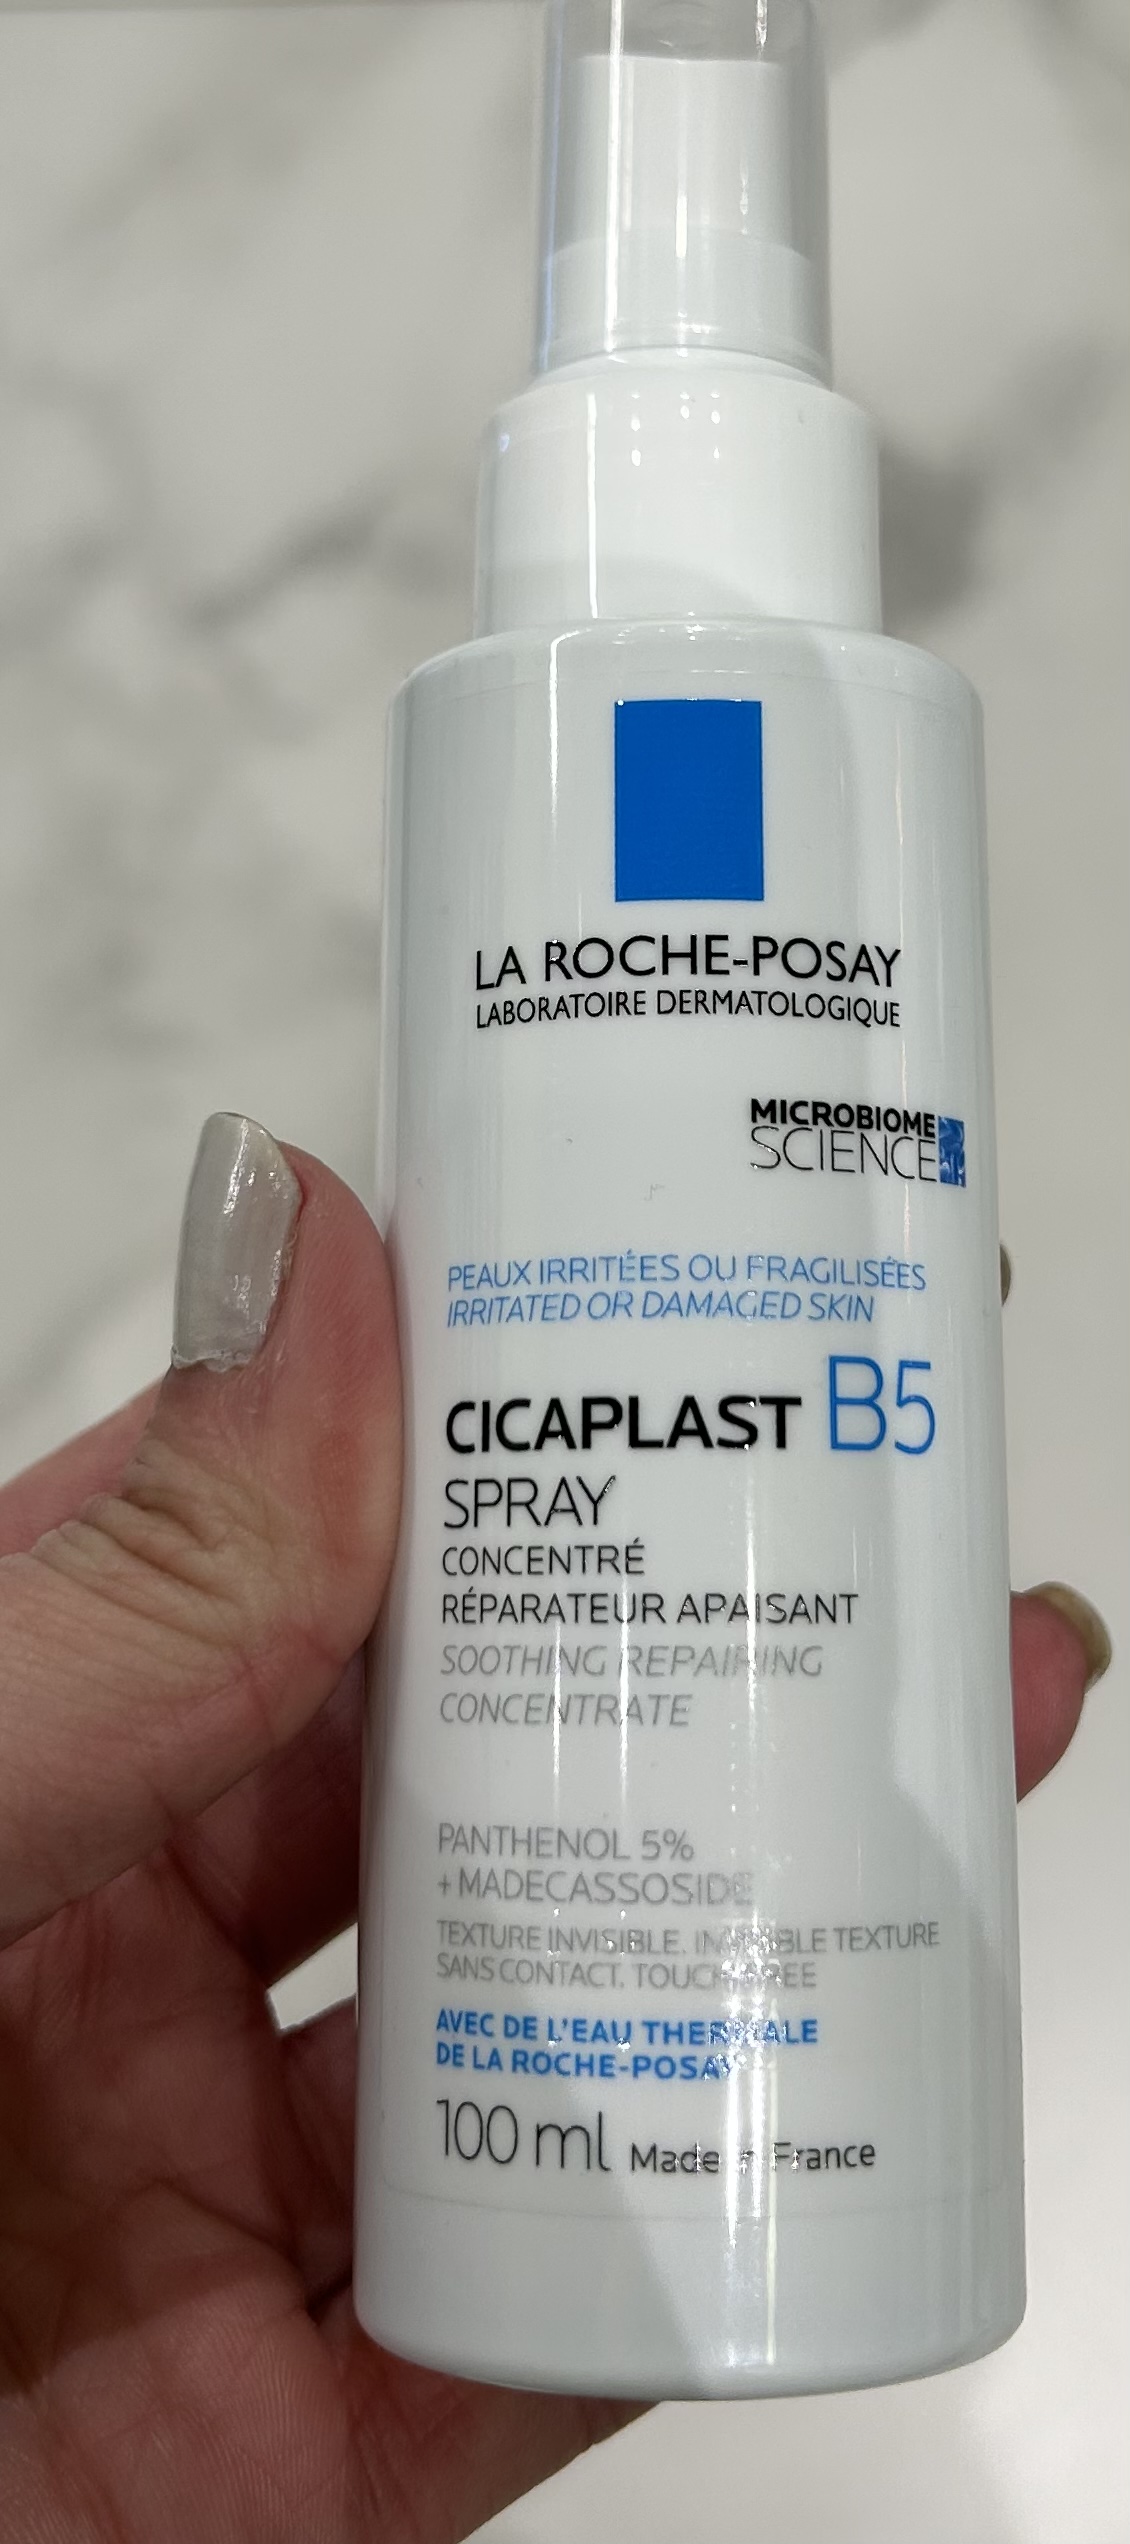 La Roche-Posay Cicaplast B5 Spray